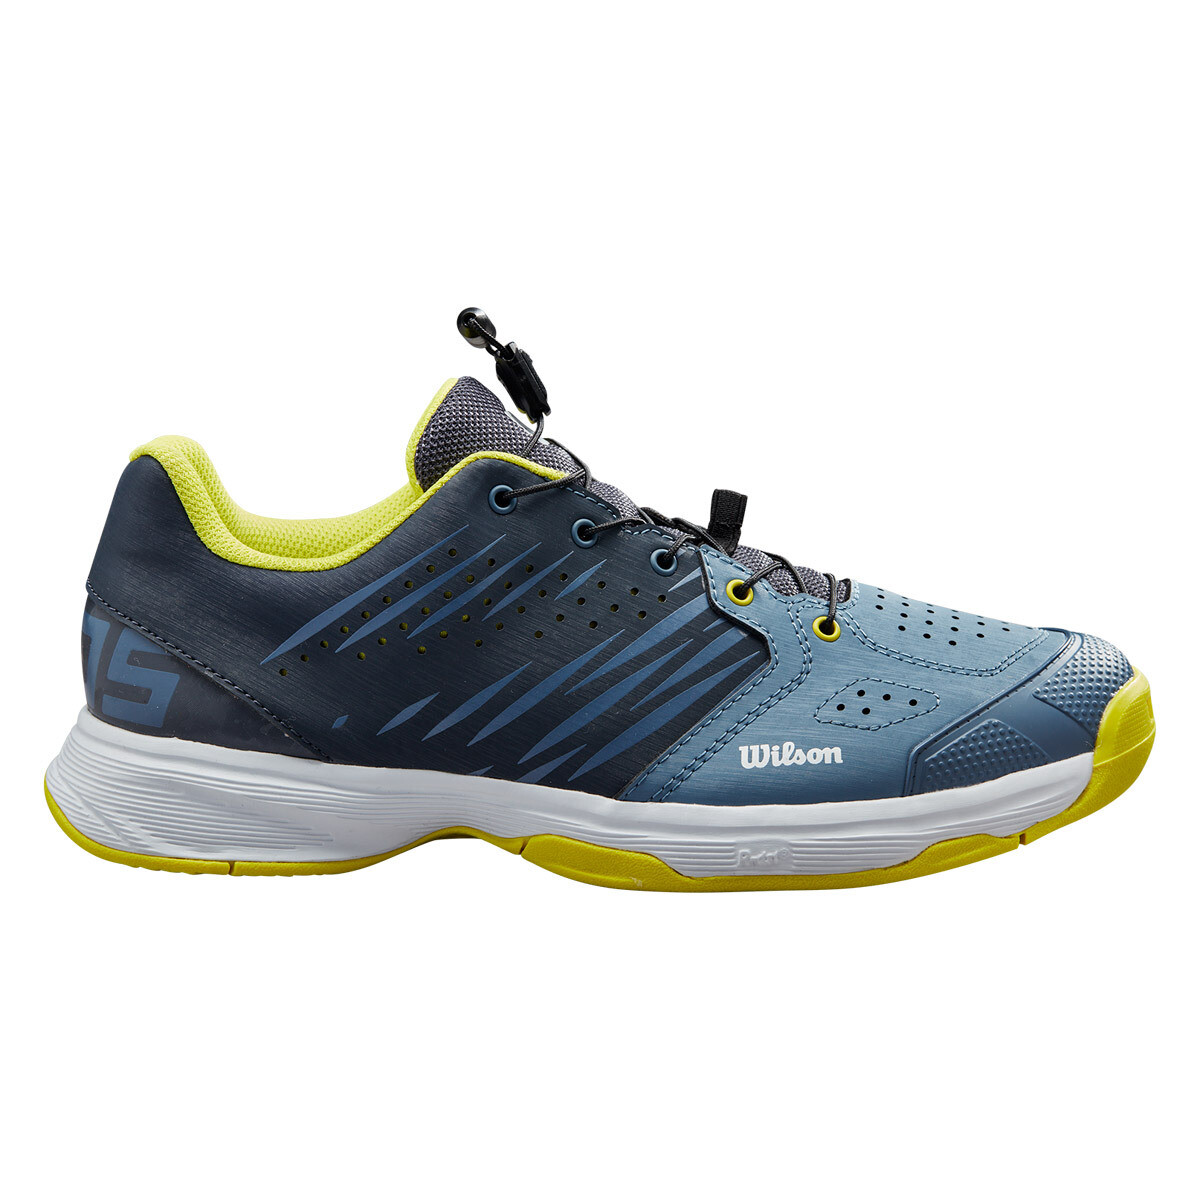 Wilson Kaos JR 2.0 QL Tennis Shoes - China Blue, Size: 3.5